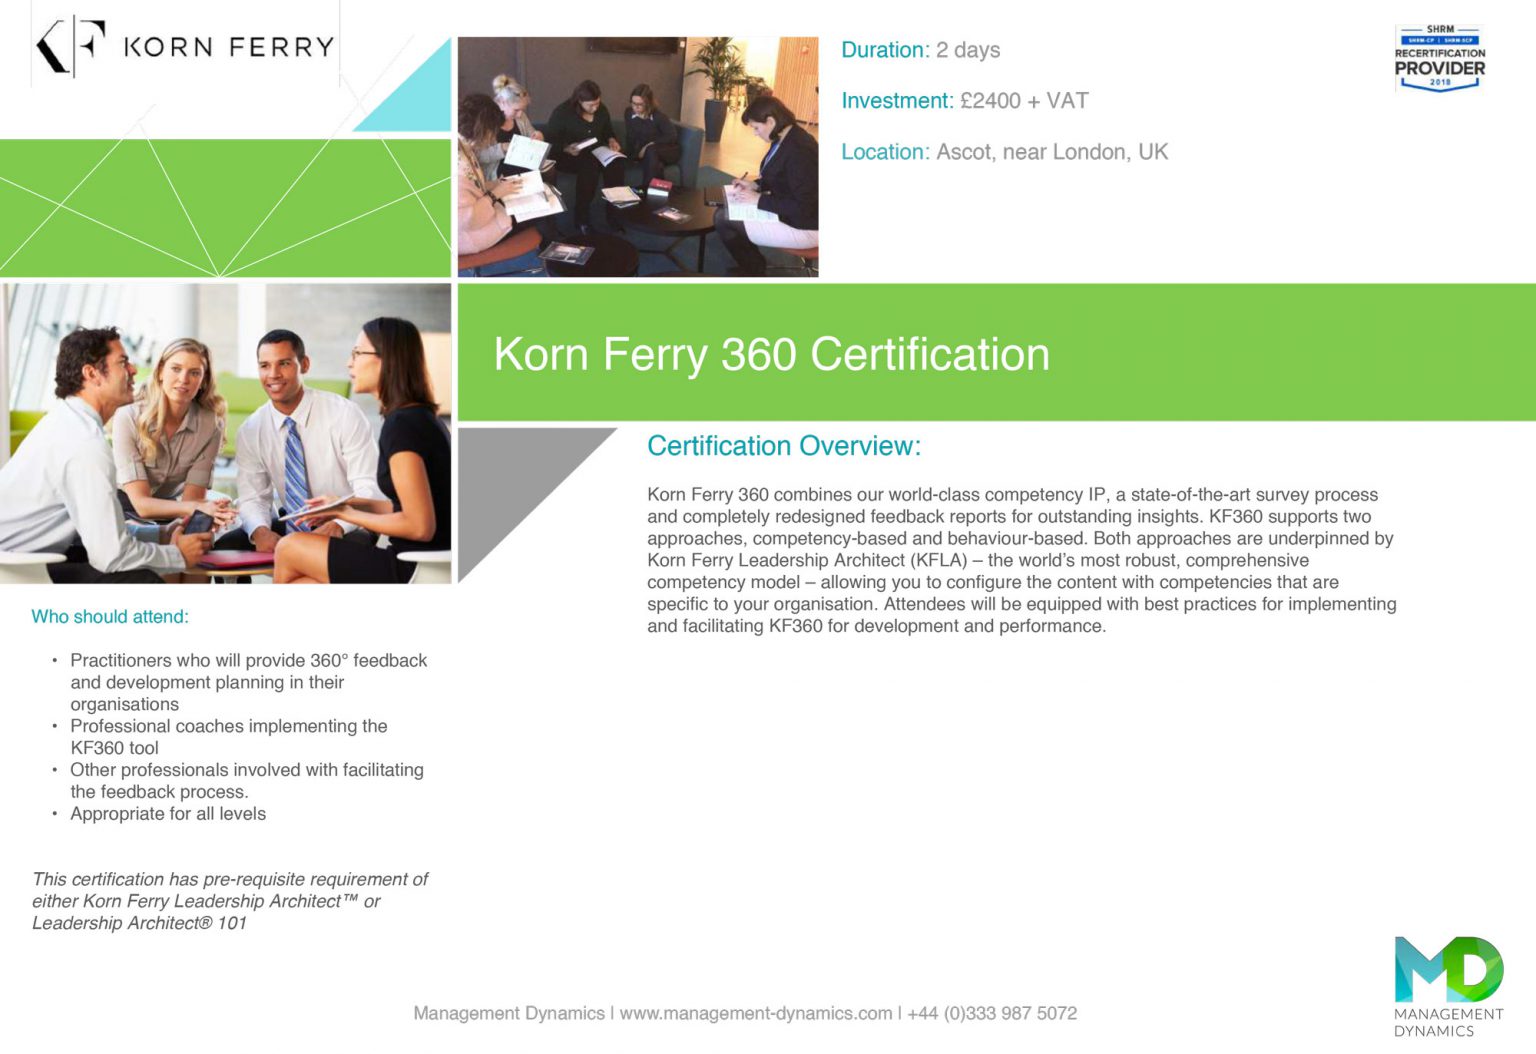 Korn Ferry: Assessments Certifications Management Dynamics